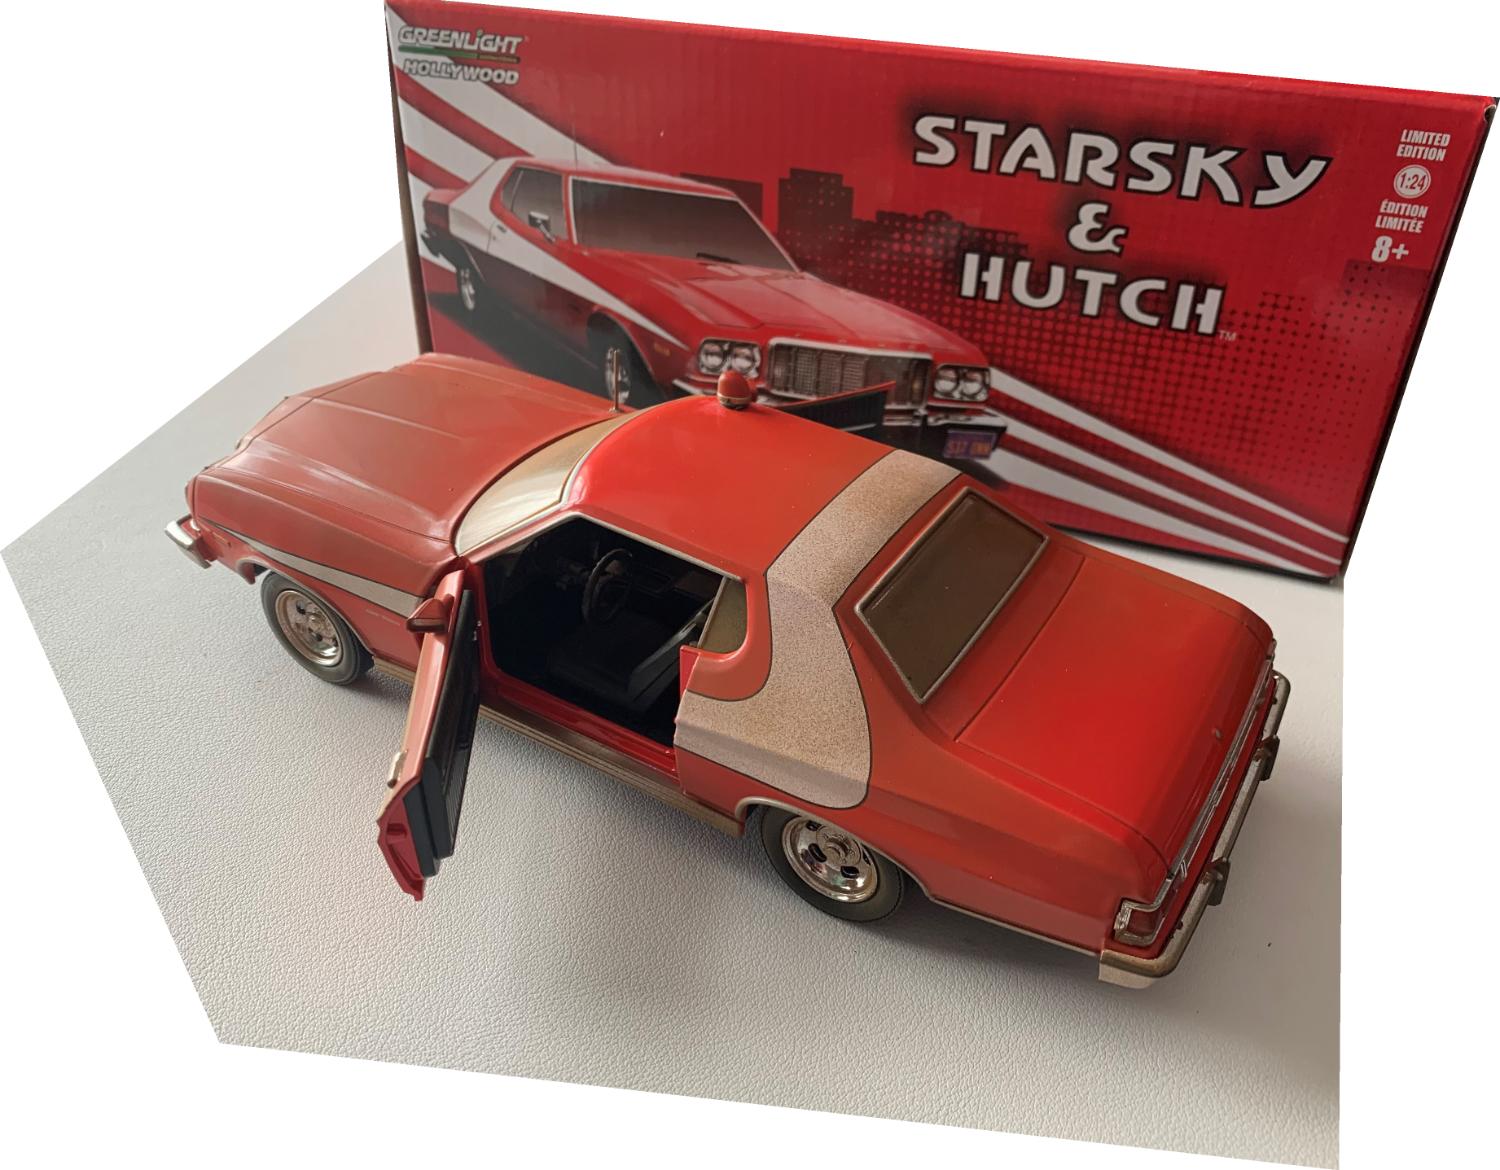 Starsky and Hutch 1976 Ford Gran Torino desgastado 1:64 Greenlight 44855F